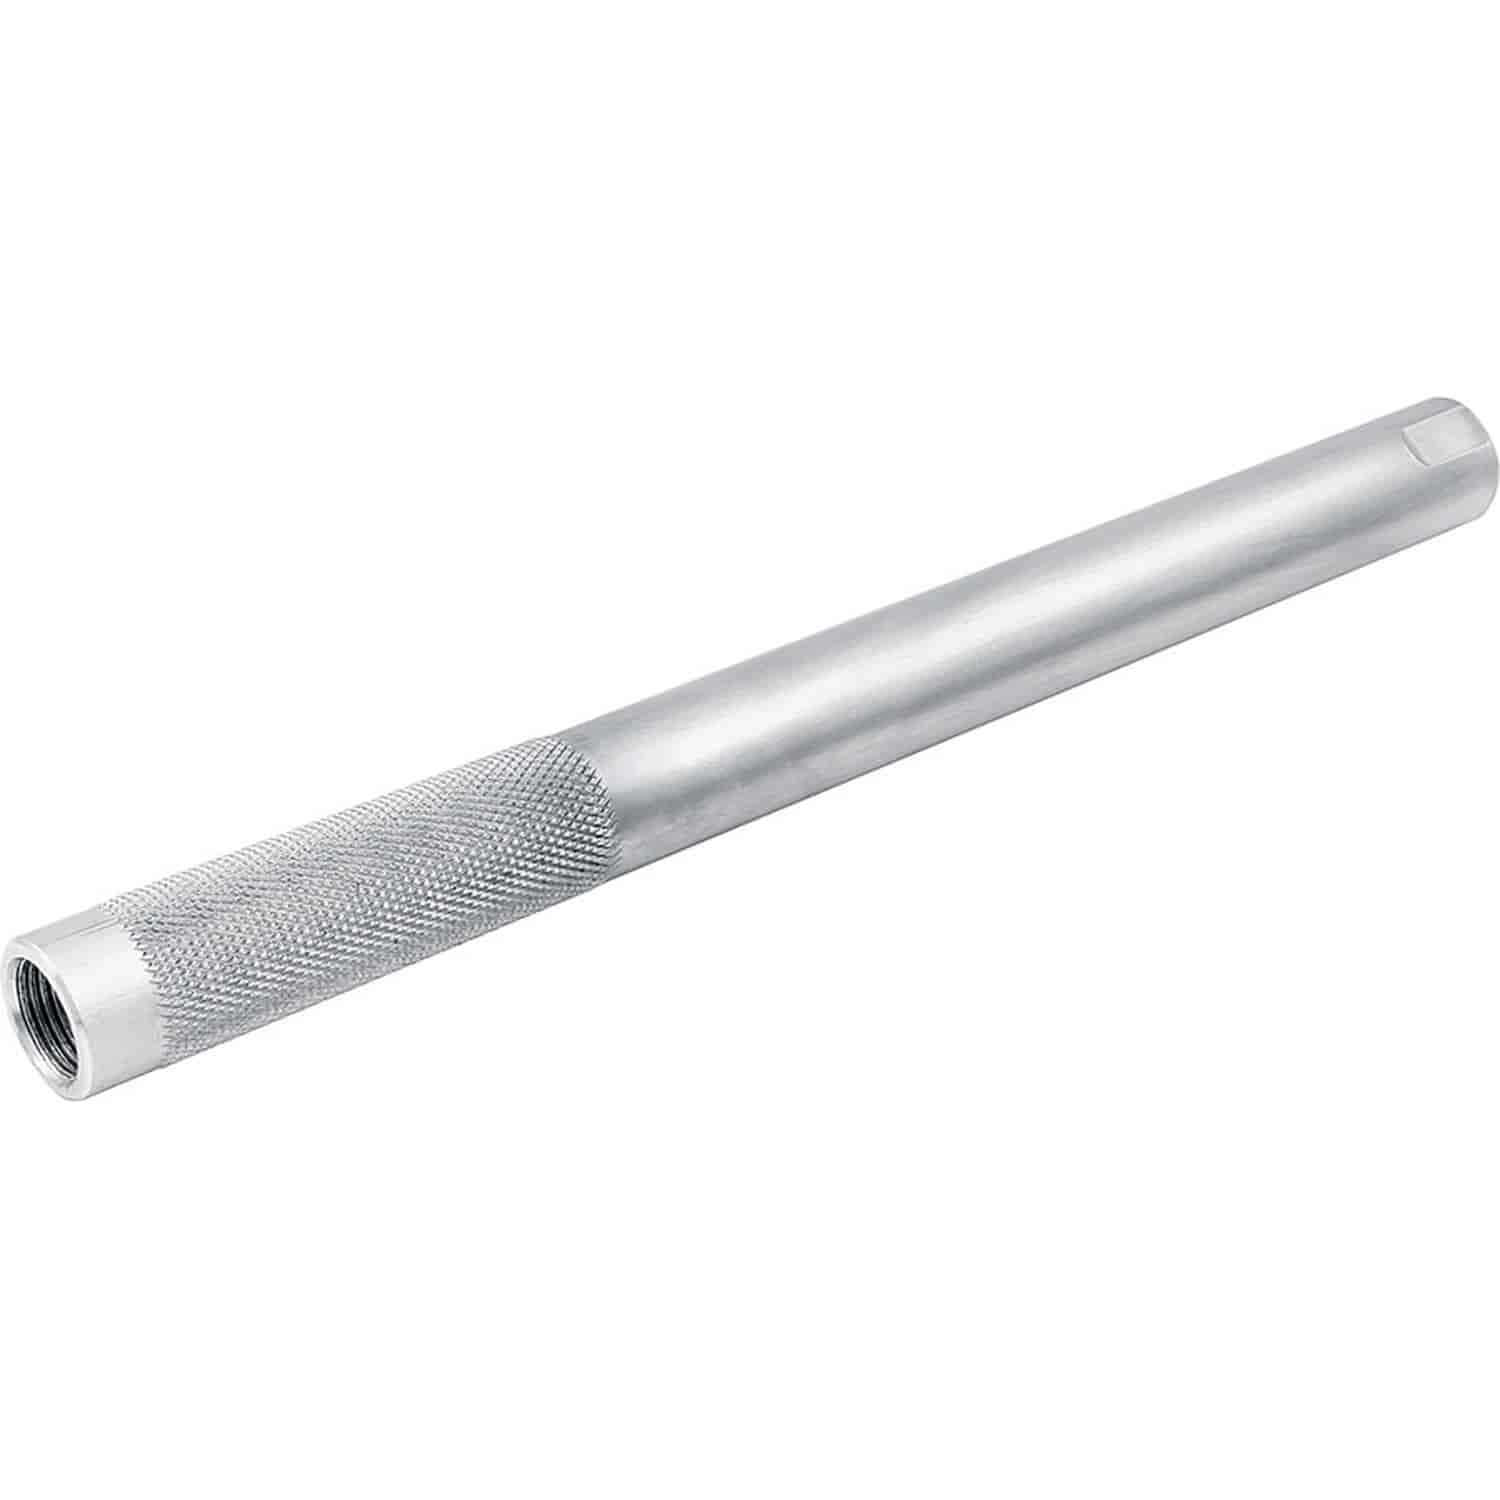 Swedged Aluminum Tie Rod Tube Length: 26"